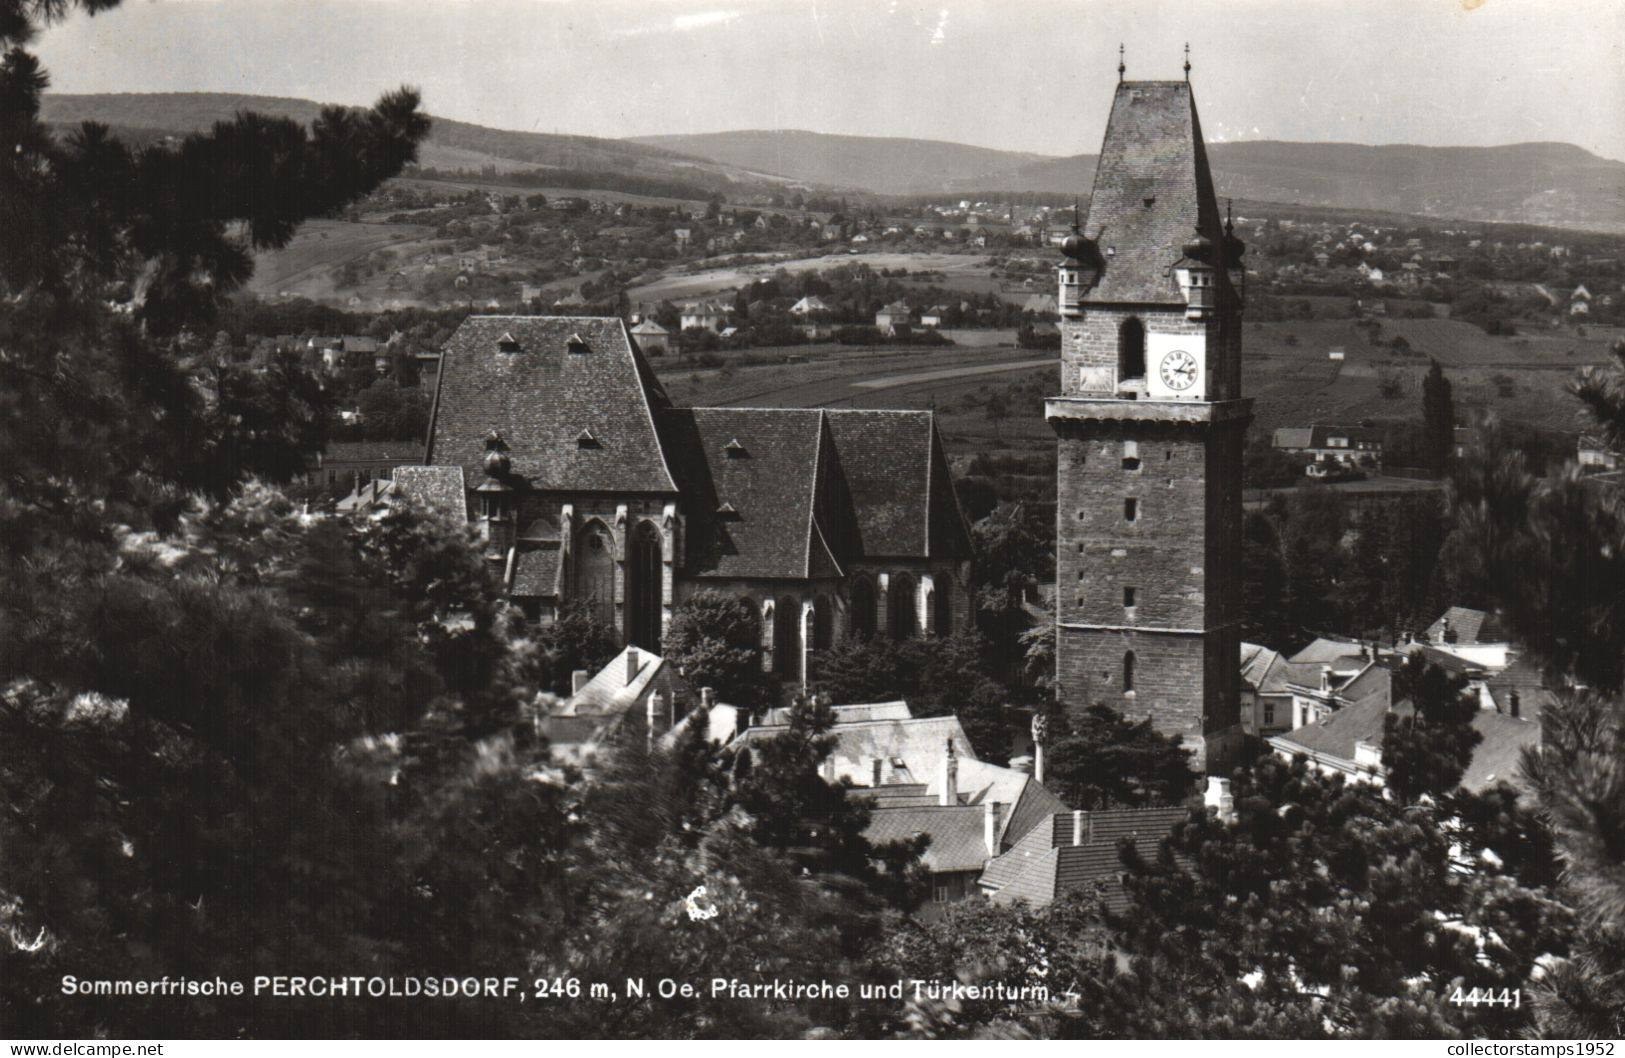 PERCHTOLDSDORF, TOWER WITH CLOCK, ARCHITECTURE, CHURCH, AUSTRIA - Perchtoldsdorf